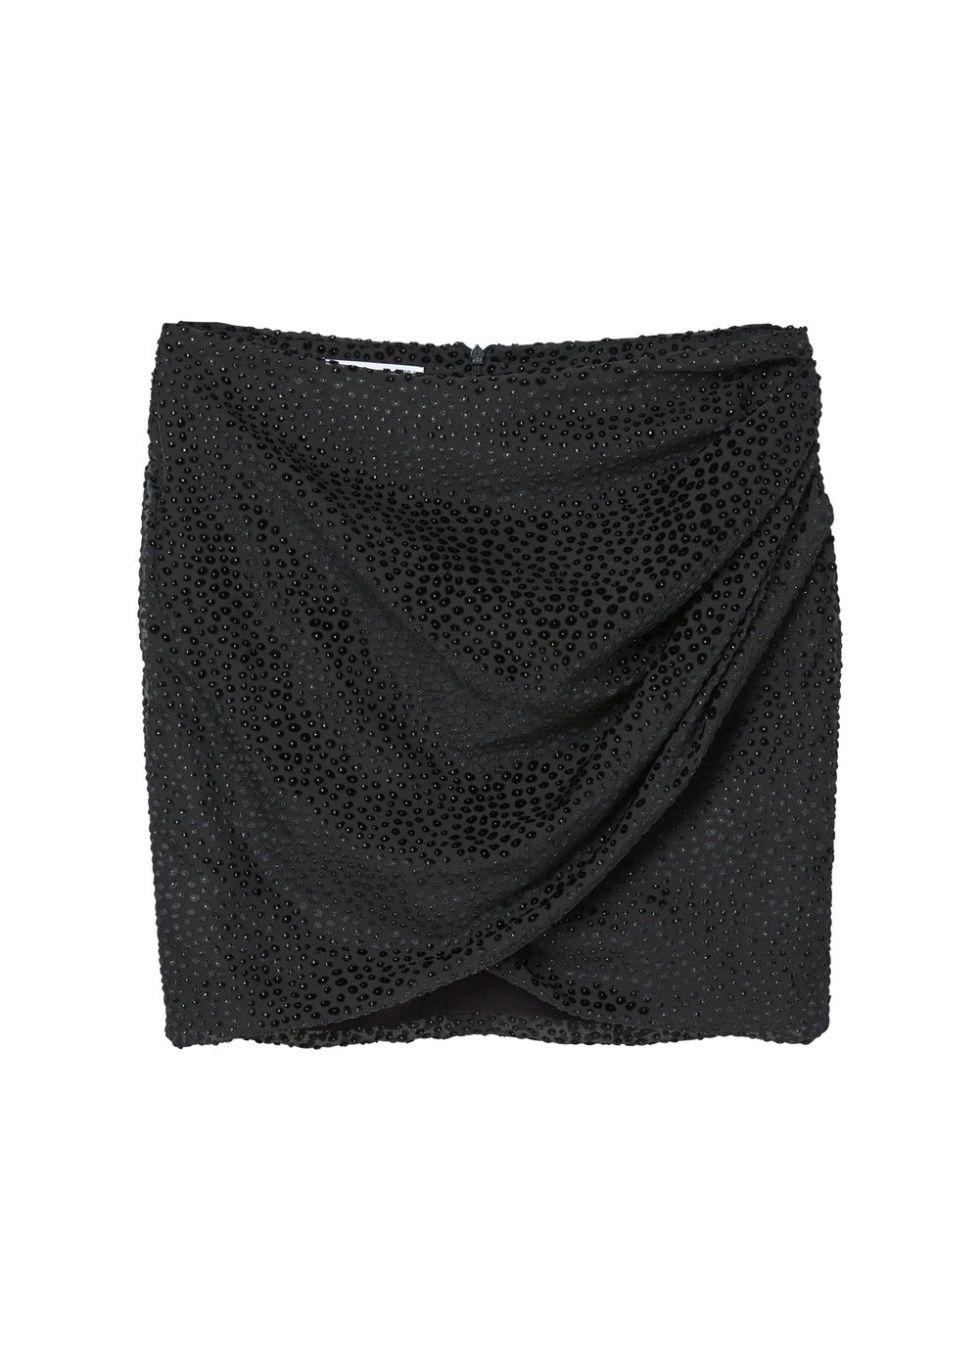 Textile, Black, Waist, Briefs, Trunks, Undergarment, Swimwear, Underpants, 